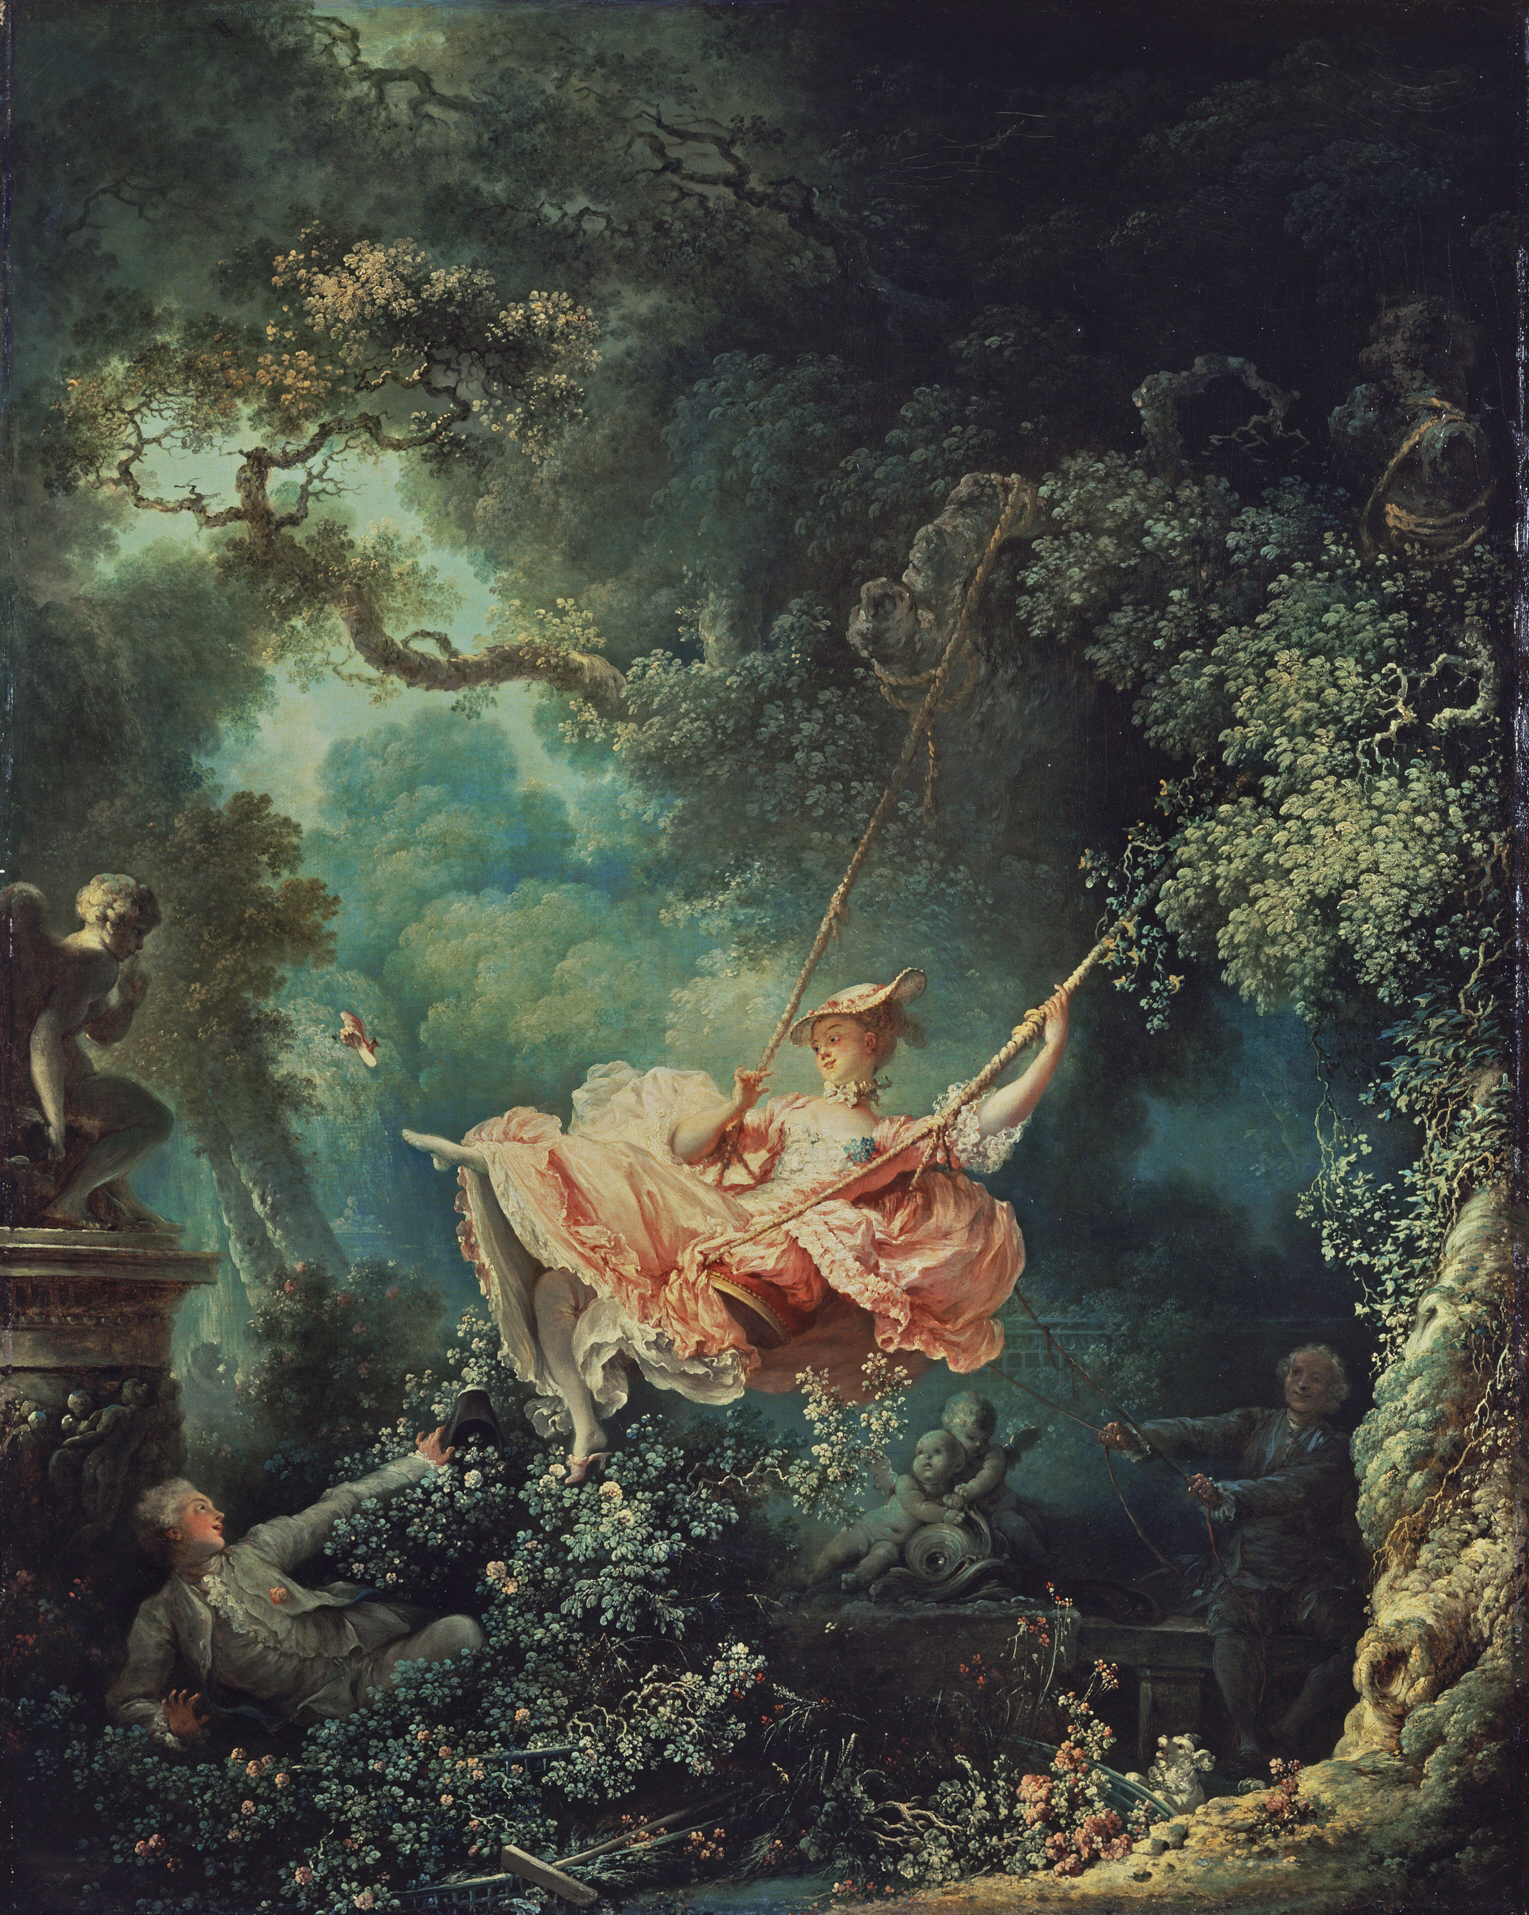 Die Schaukel by Jean-Honoré Fragonard - 1767-1768 - 81 × 64 cm Wallace Collection